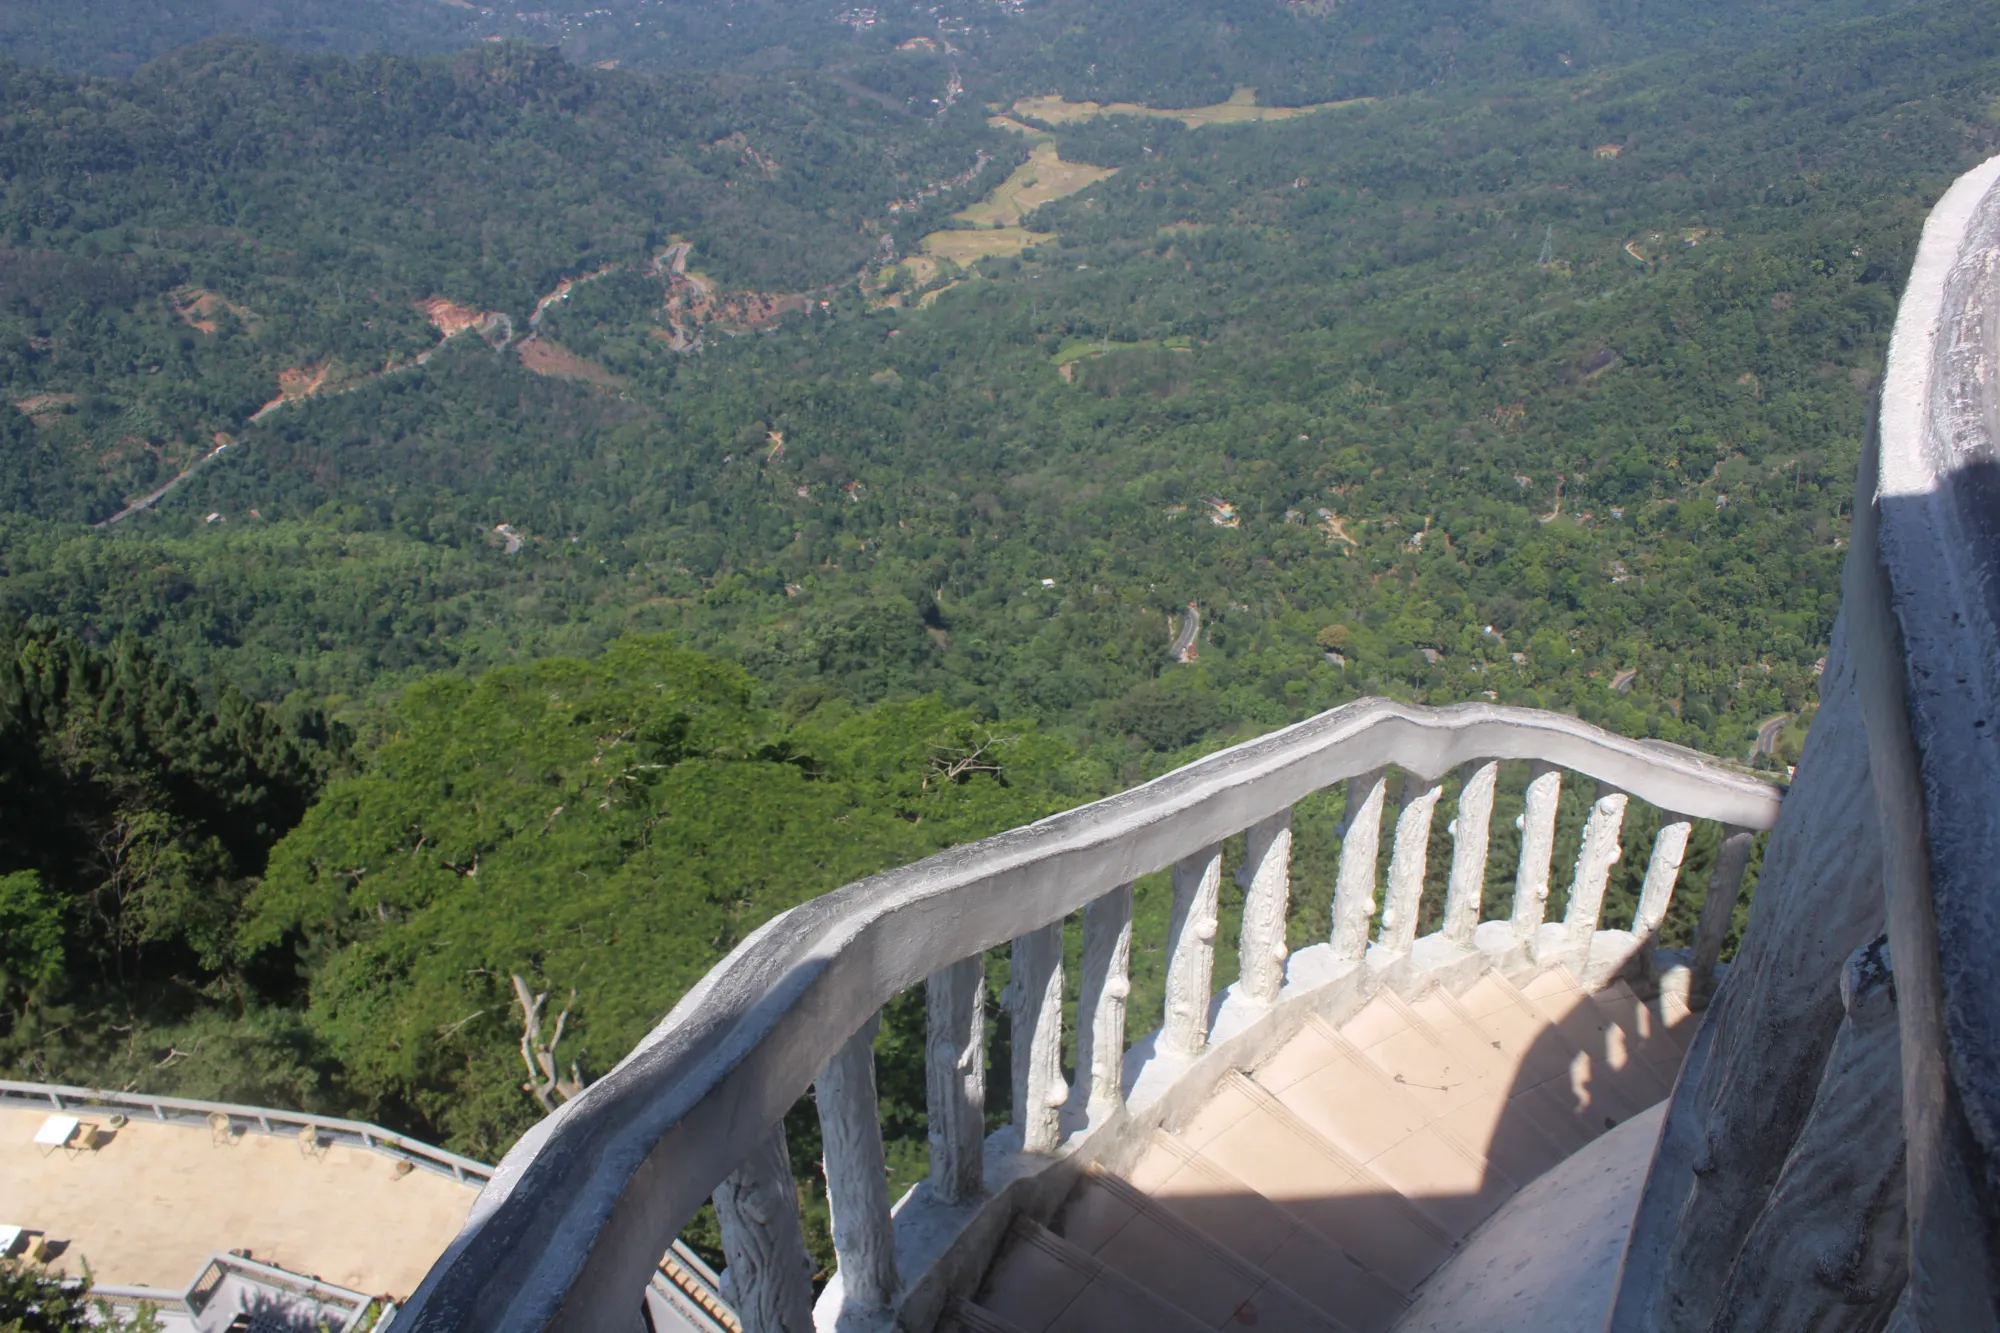 The staircase and surrounding scenery at Ambuluwawa tower in Sri Lanka